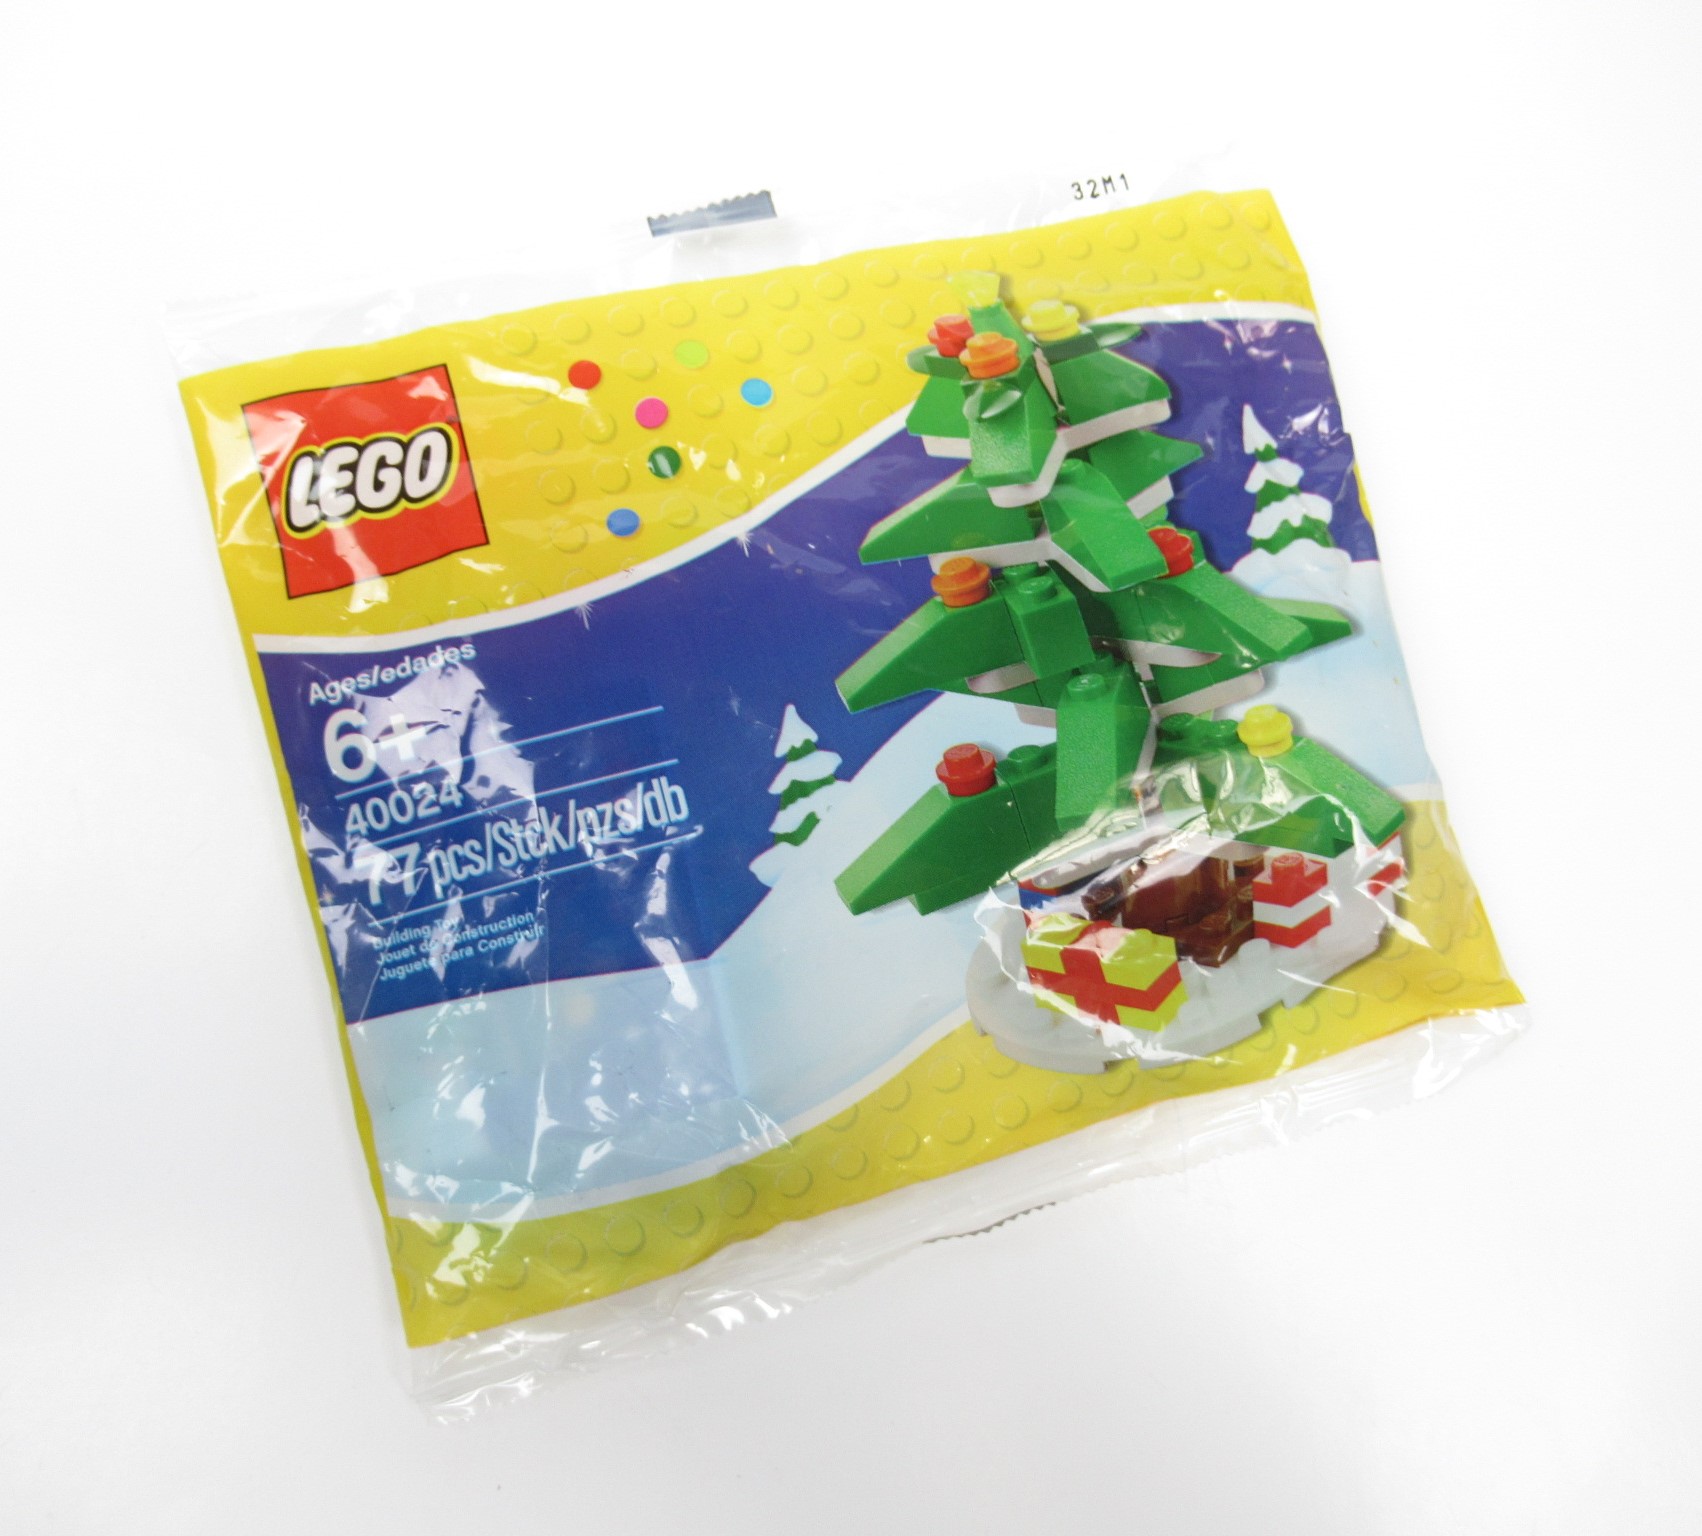 Immagine relativa a LEGO Creator - 40024 Weihnachtsbaum Polybag